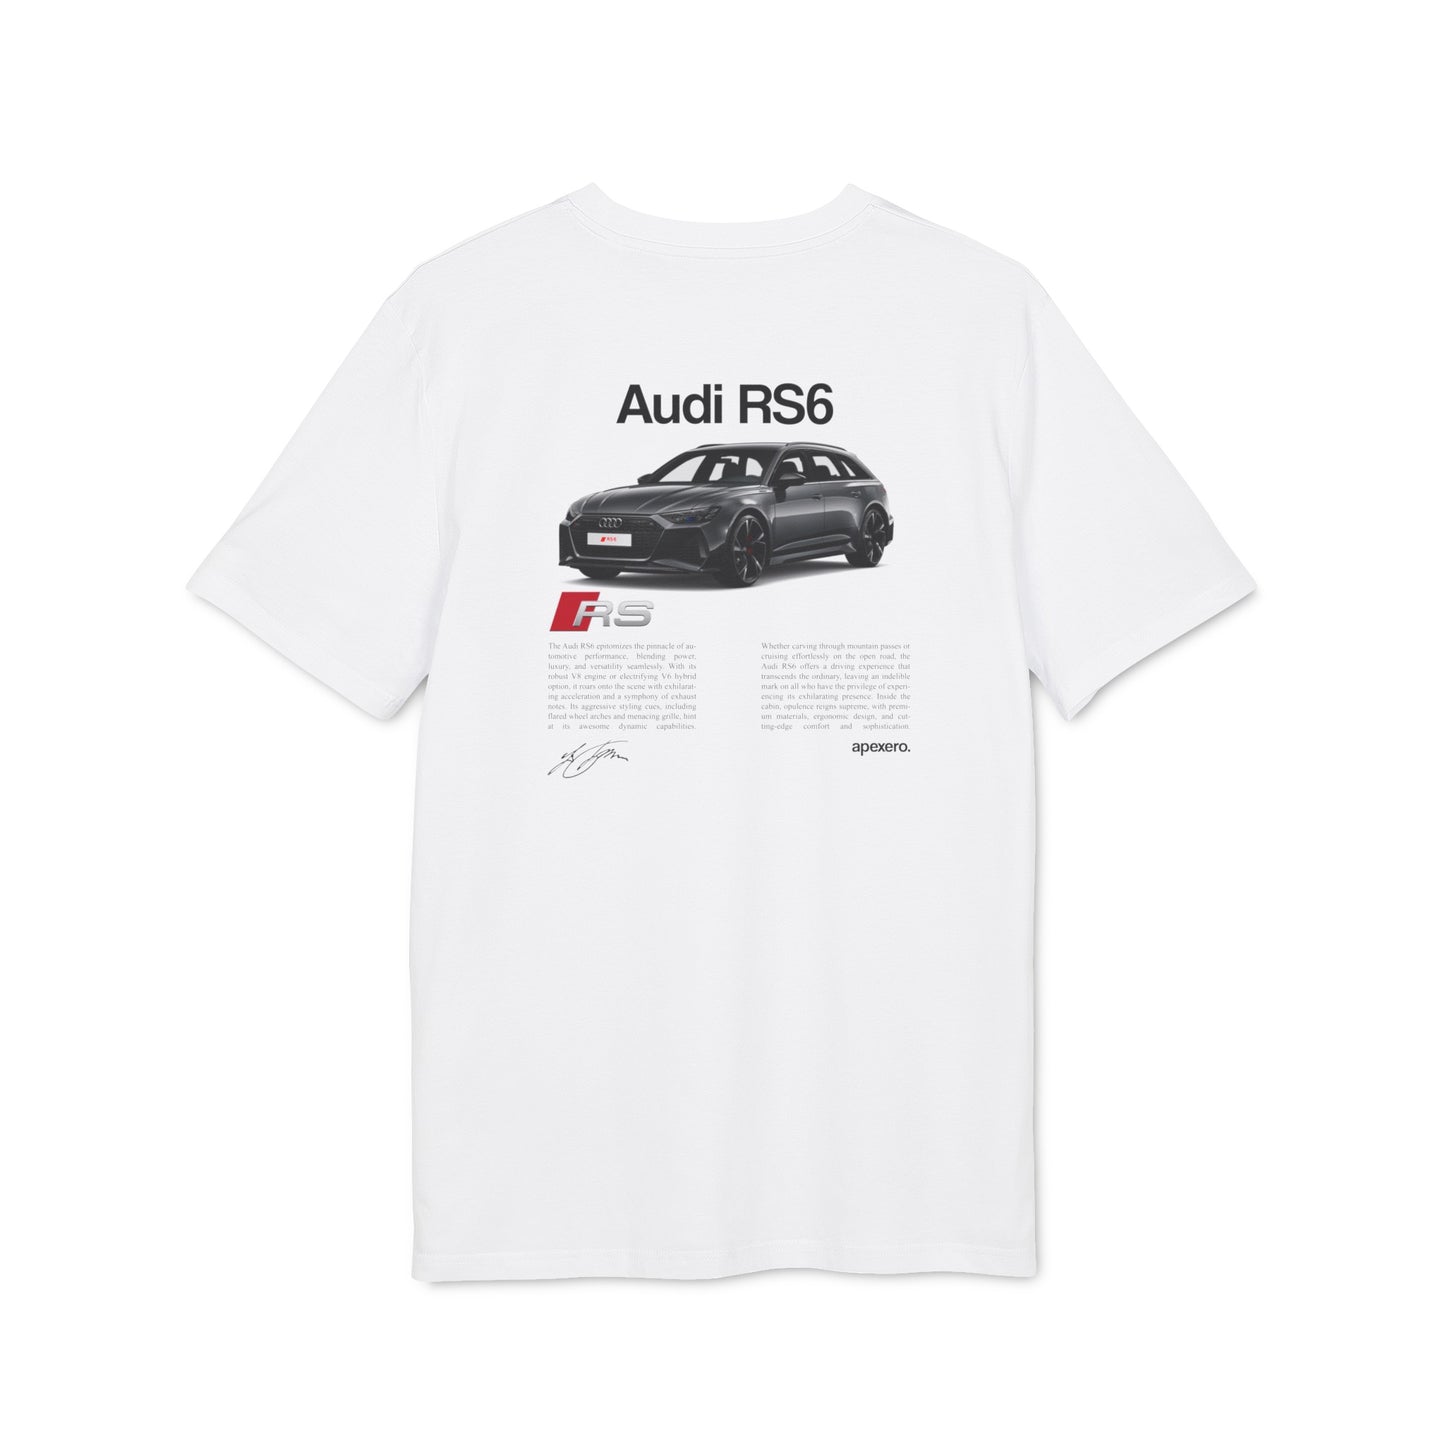 Audi RS6 T-shirt